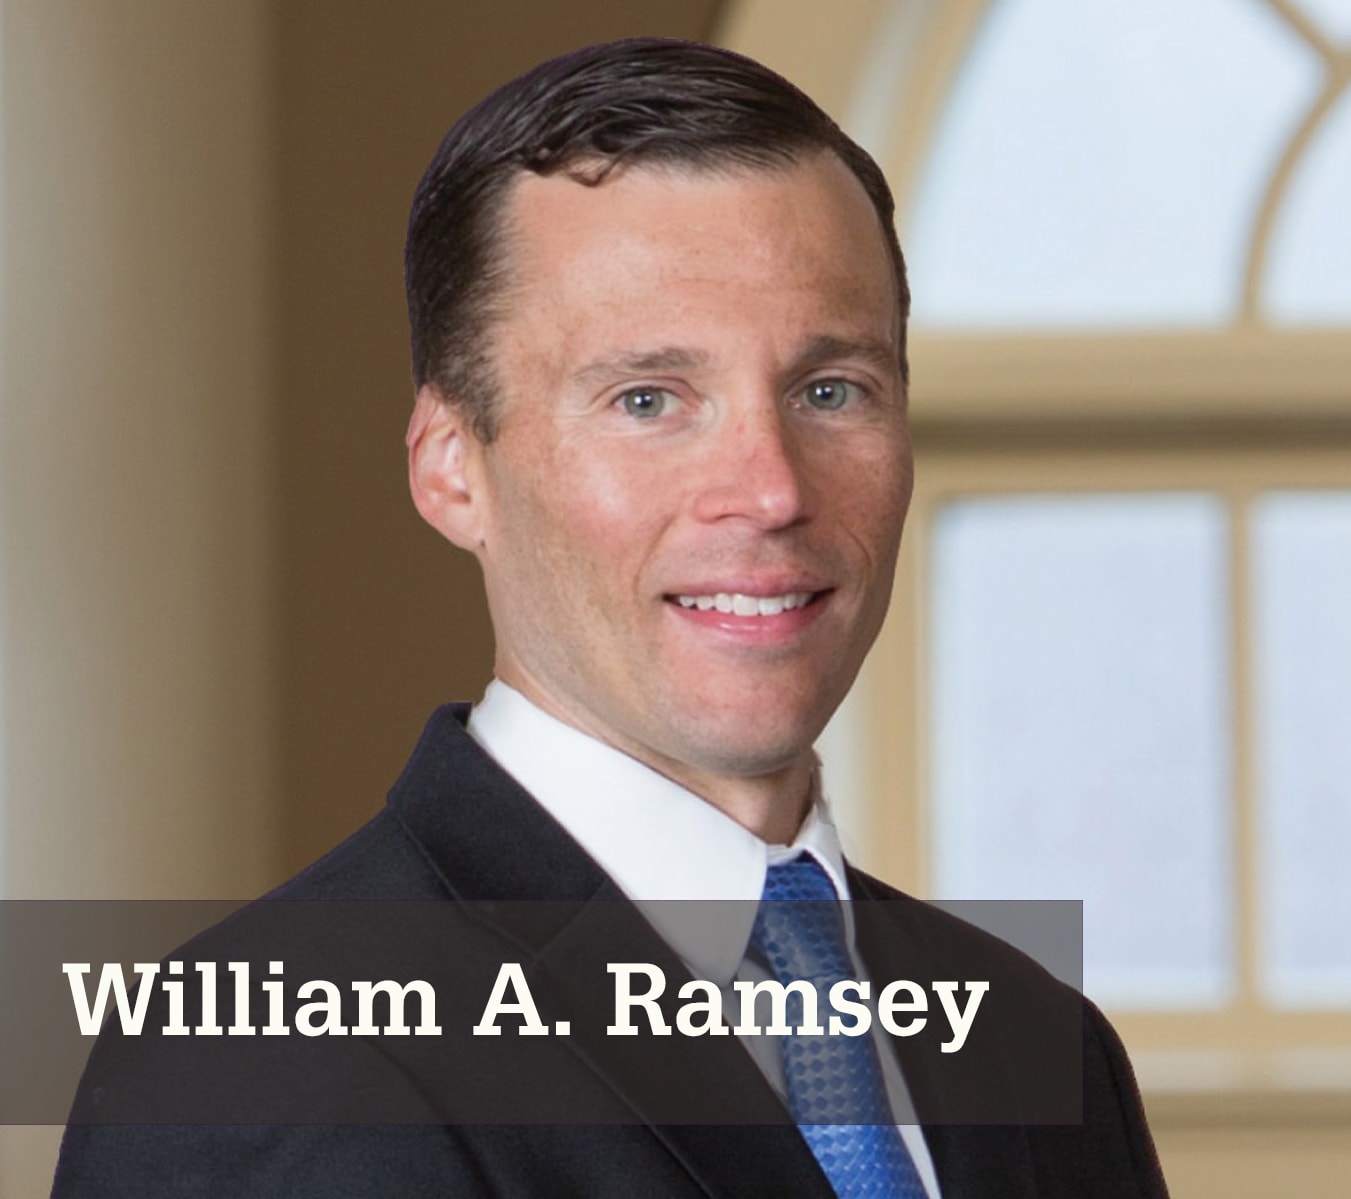 William A. Ramsey